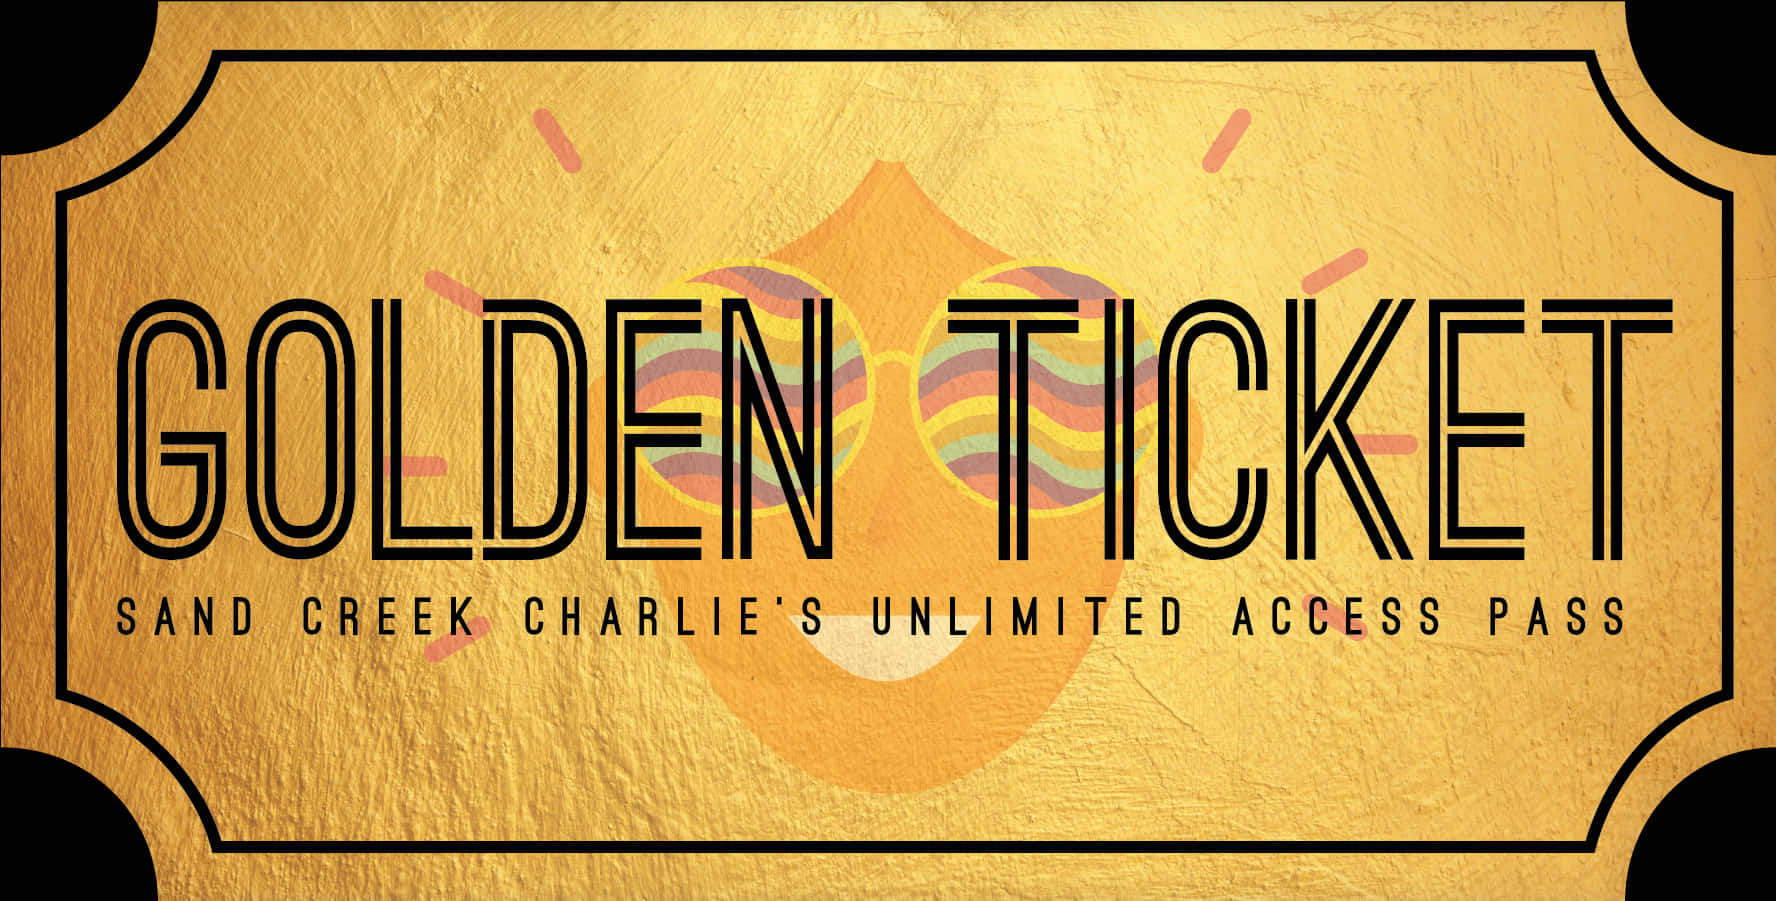 Golden Ticket Unlimited Access Pass